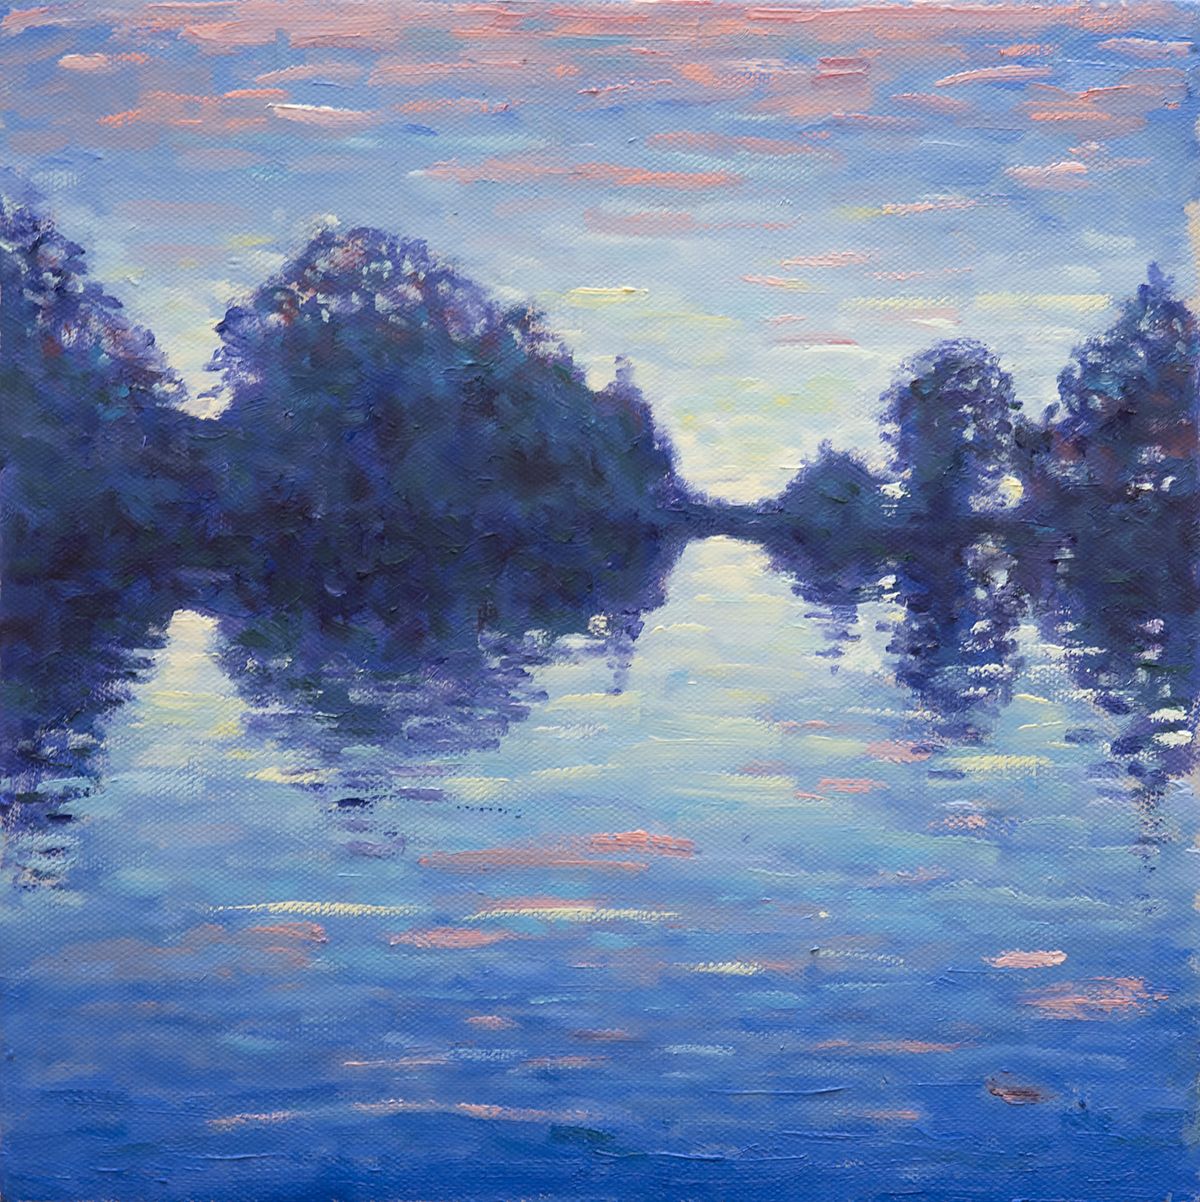 Evensong on the Thames (etude) by Lee Tiller